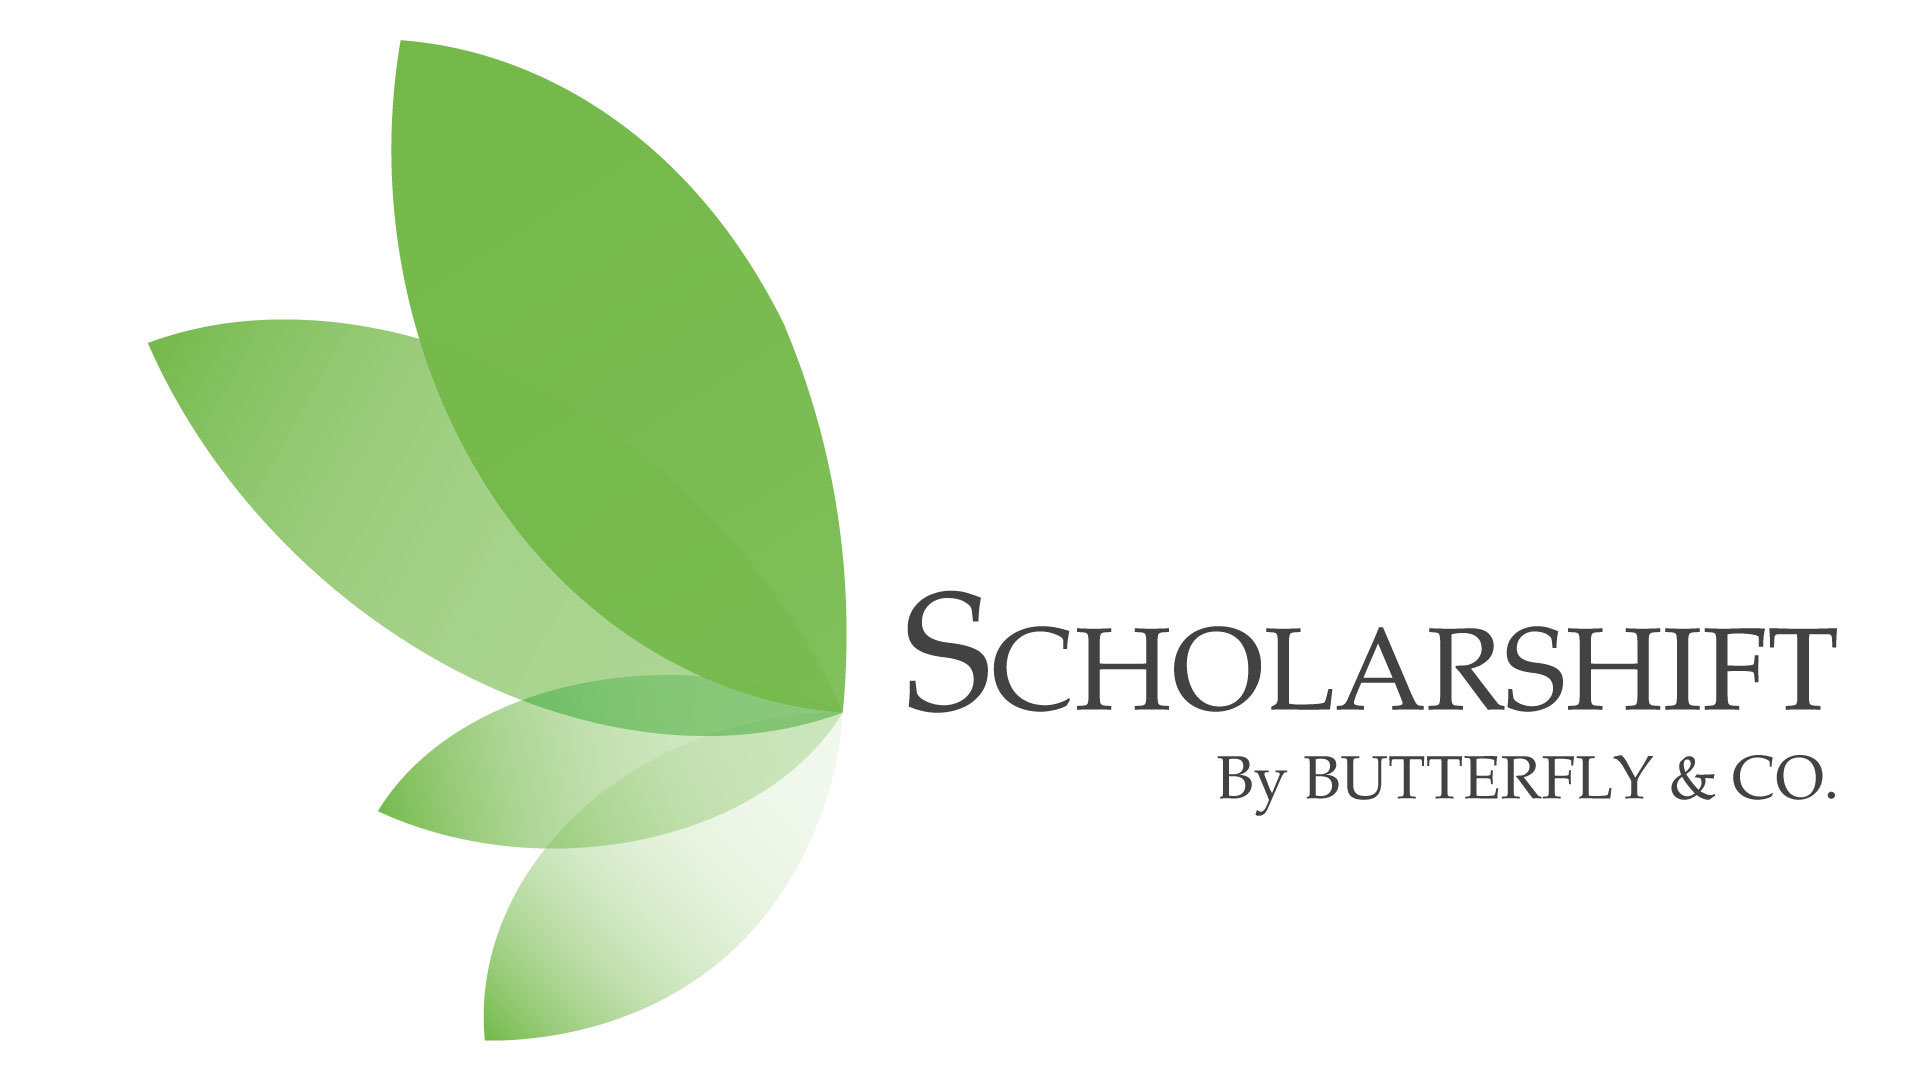 Buttefly&Co - Logo RSE Fonds Scholarshift